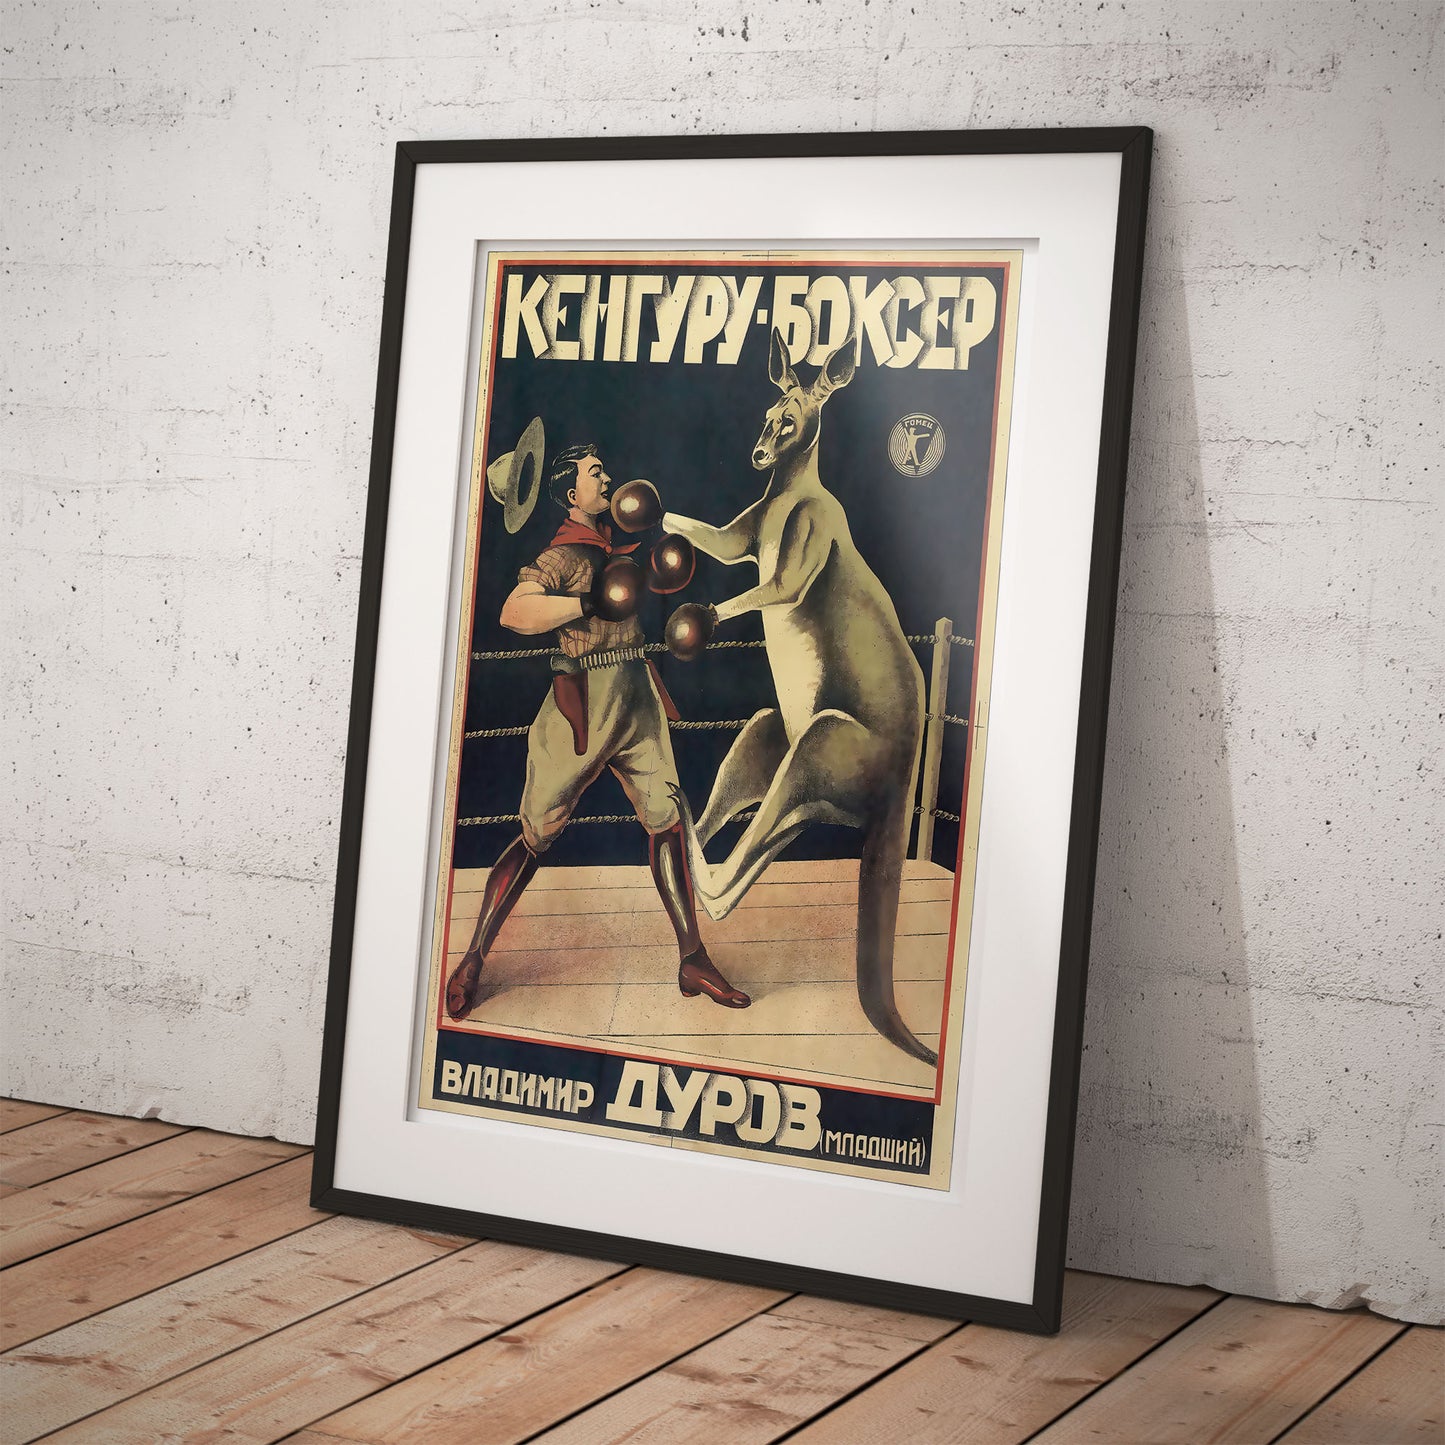 Boxing kangaroo (Кенгуру -Боксер), Vladimir Durov Jr - Circus poster seen on Friends tv show